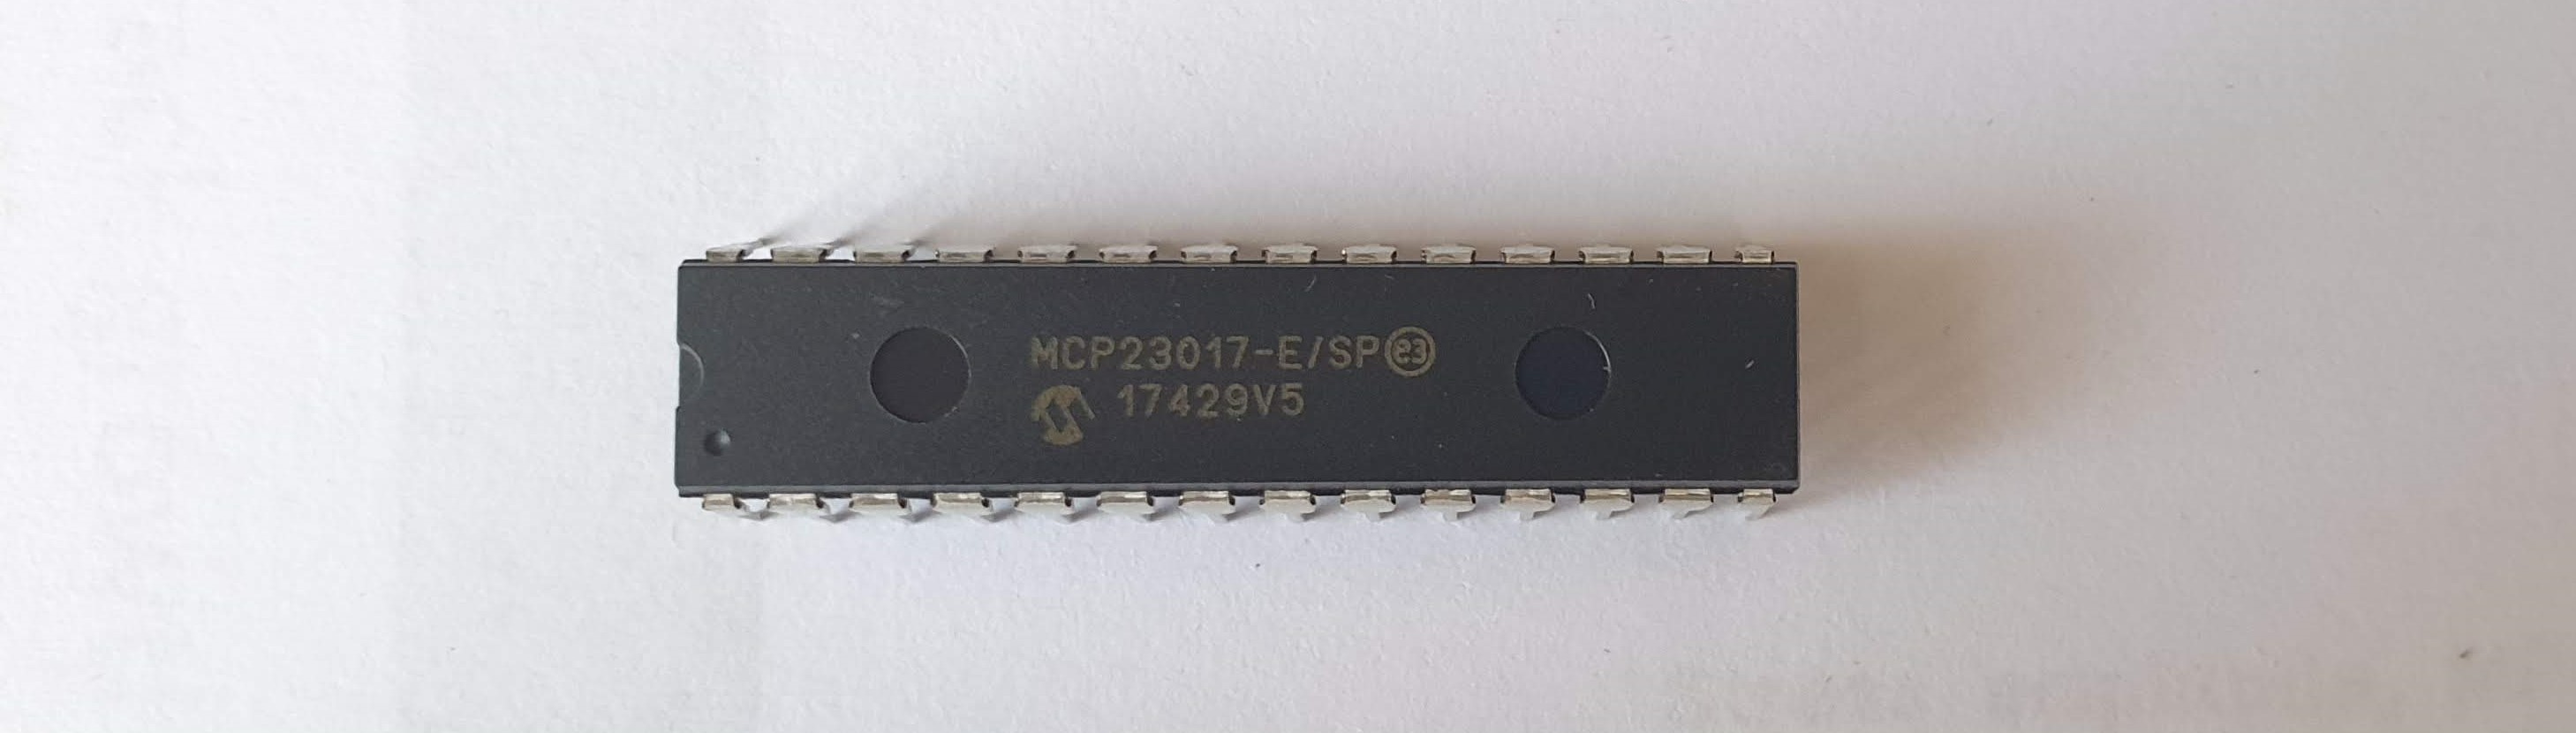 Image of MCP23017 chip